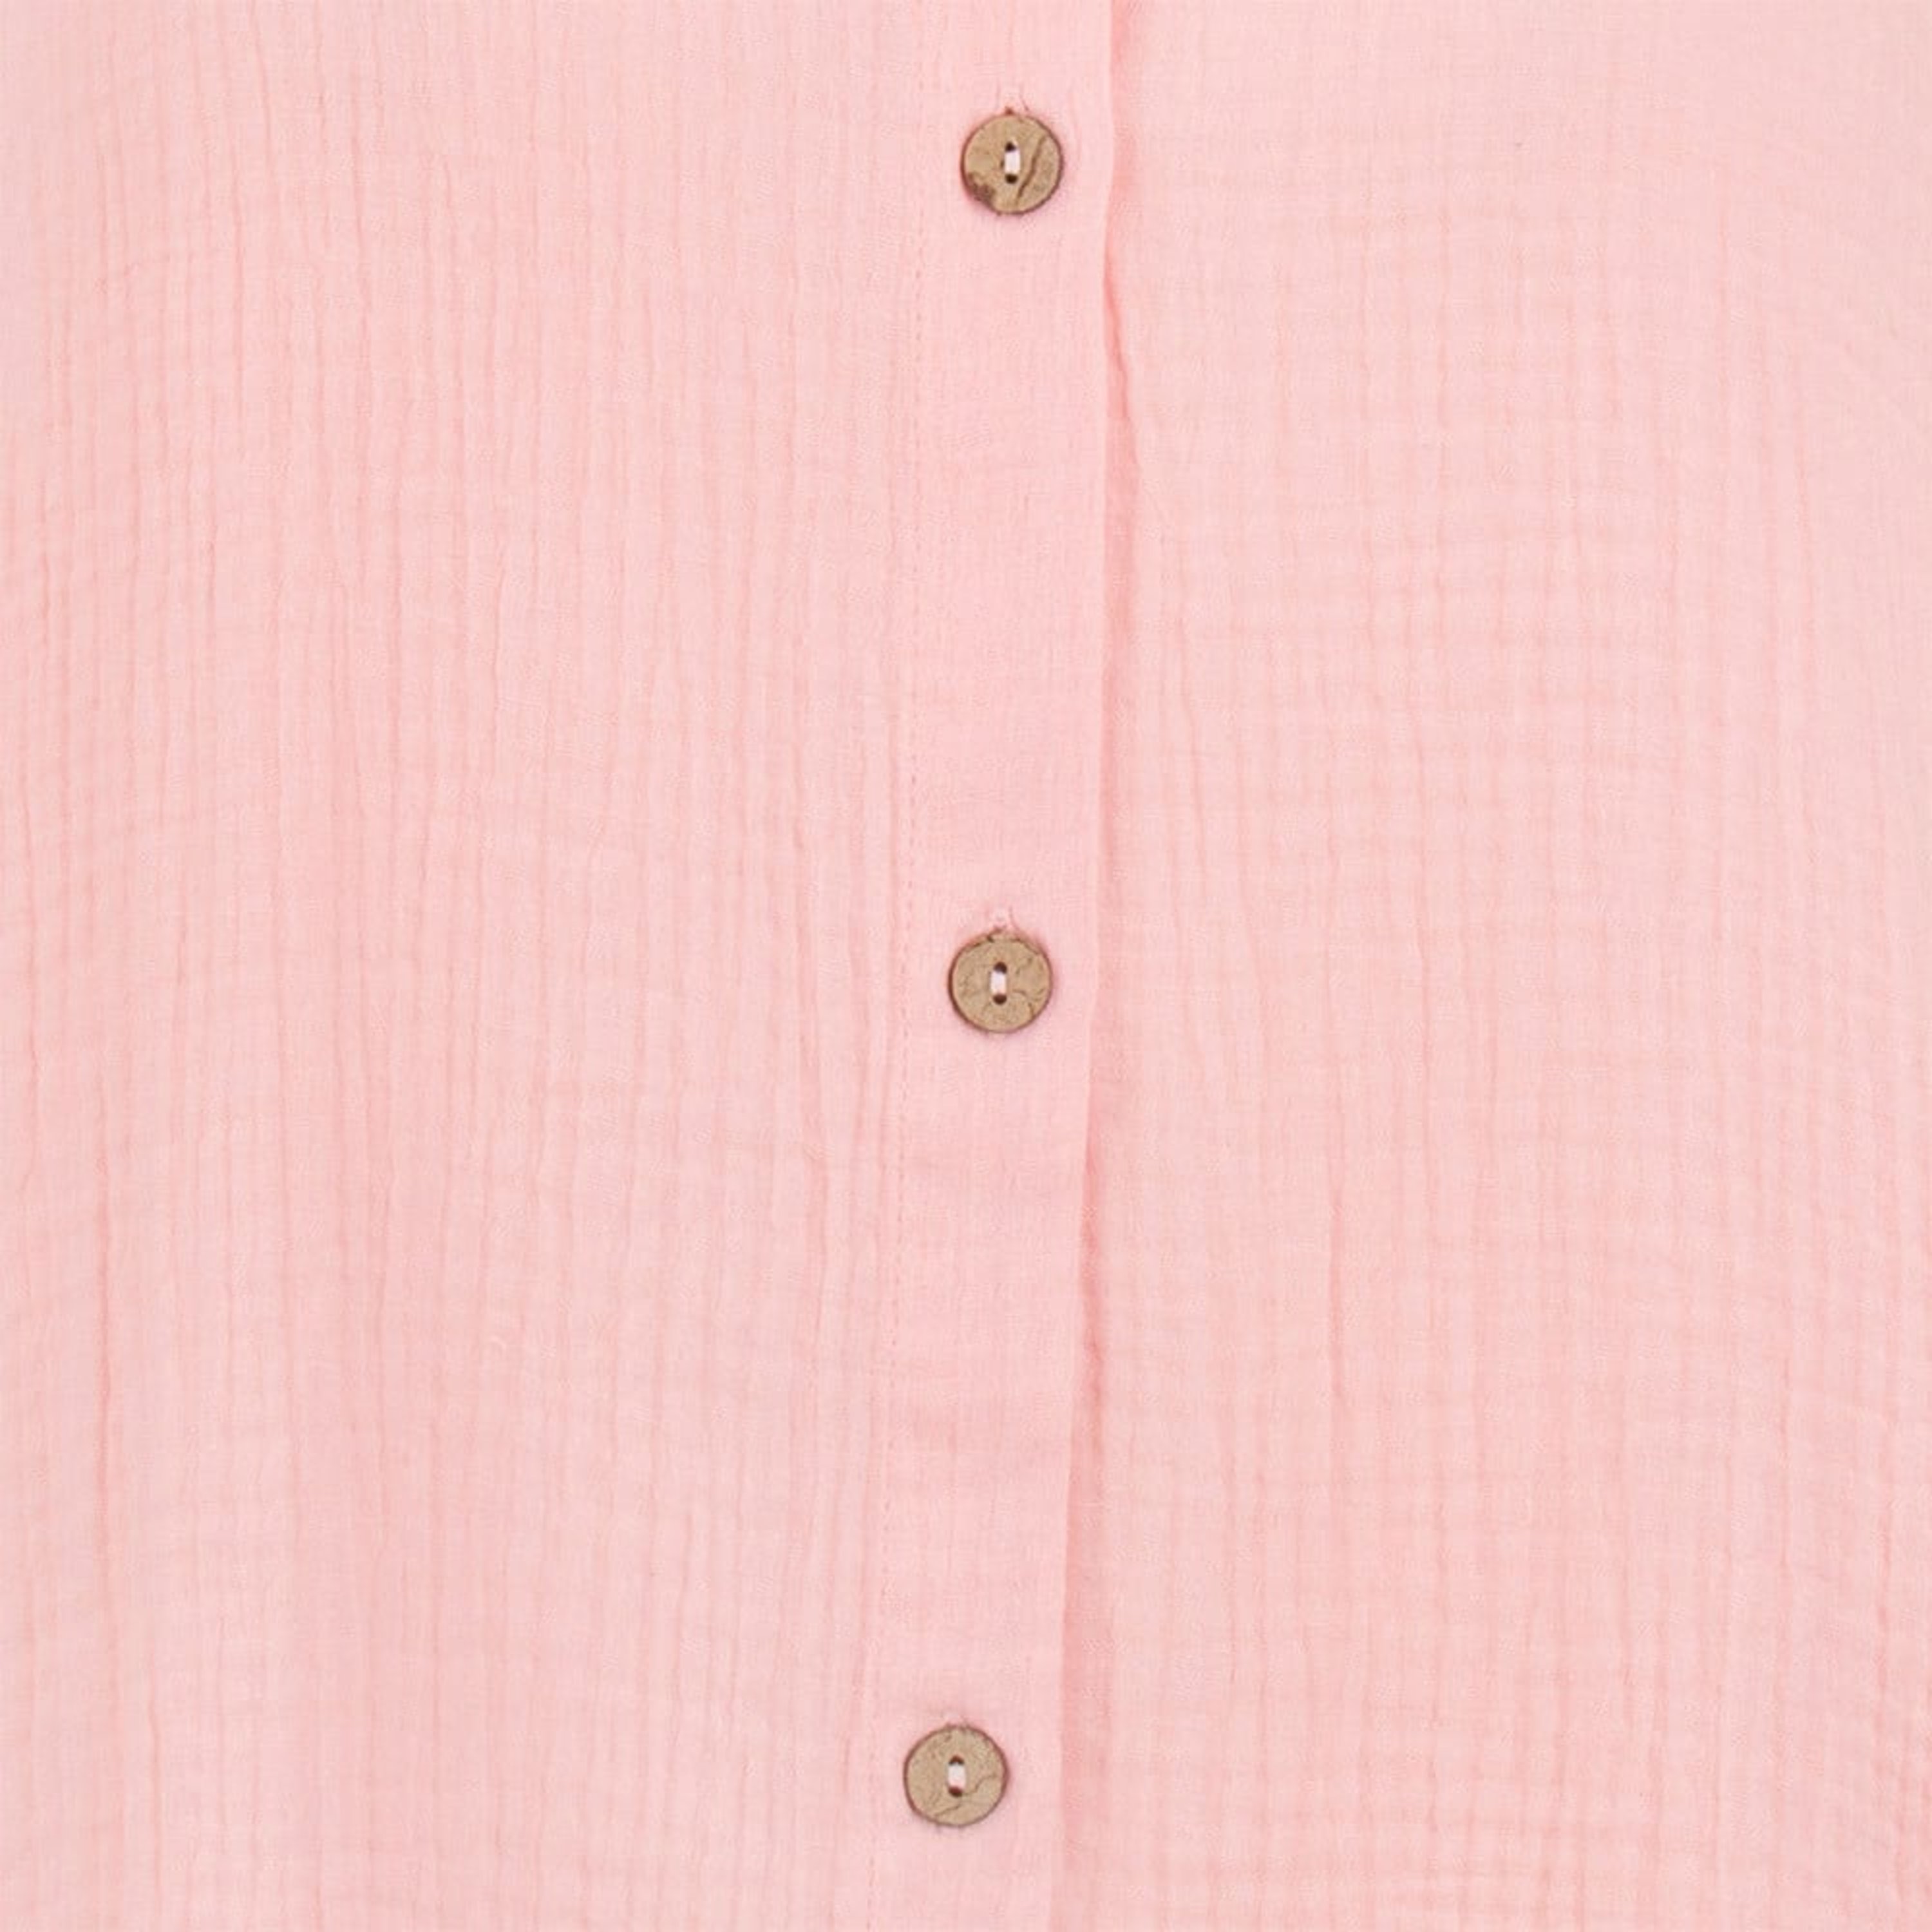 felt so pretty in pink 🩷 top: @torrid “double gauze button up” skirt:  @ @fashion heels: @torrid “wrap thong sanda